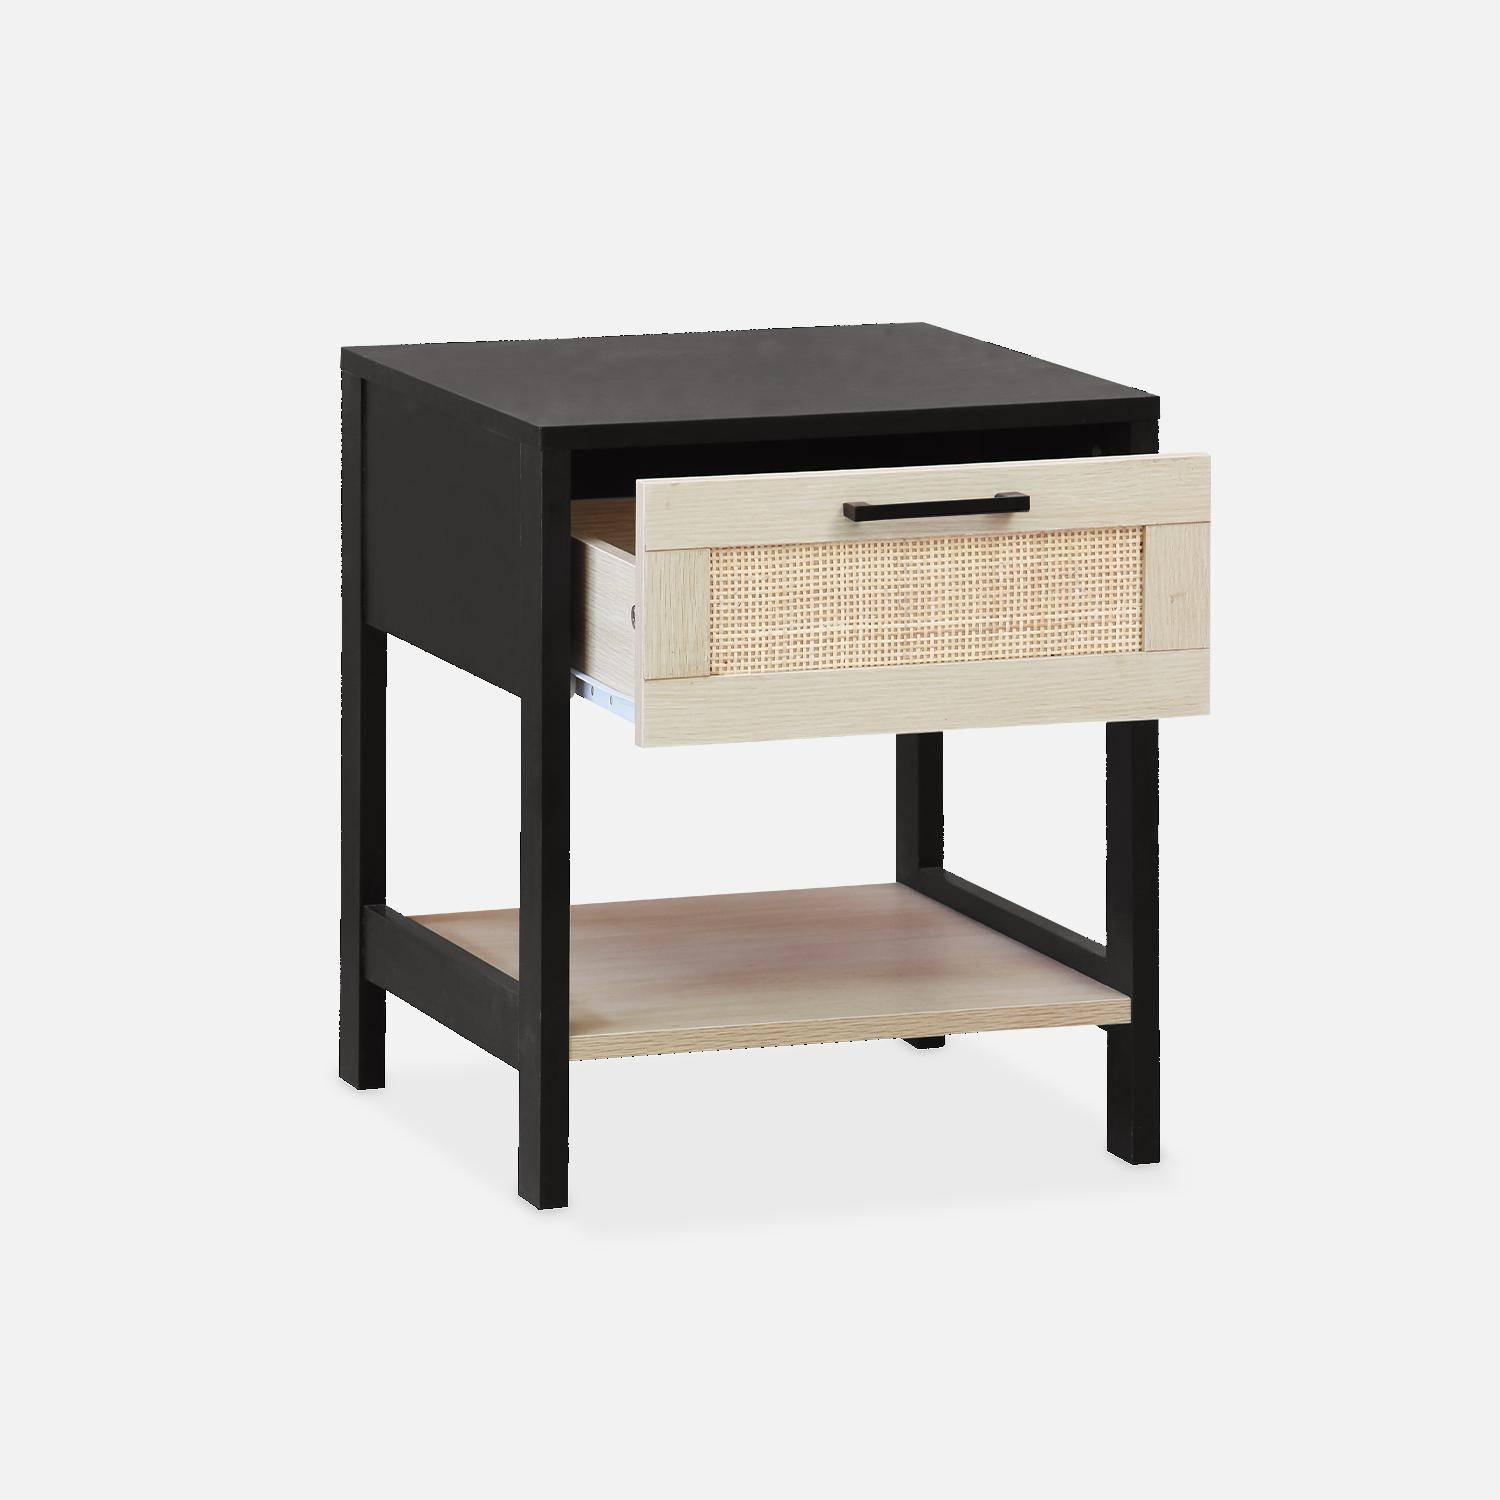 Black and cane bedside table 40 x 40 x 48cm - Bianca - 1 drawer, 1 shelf,sweeek,Photo4